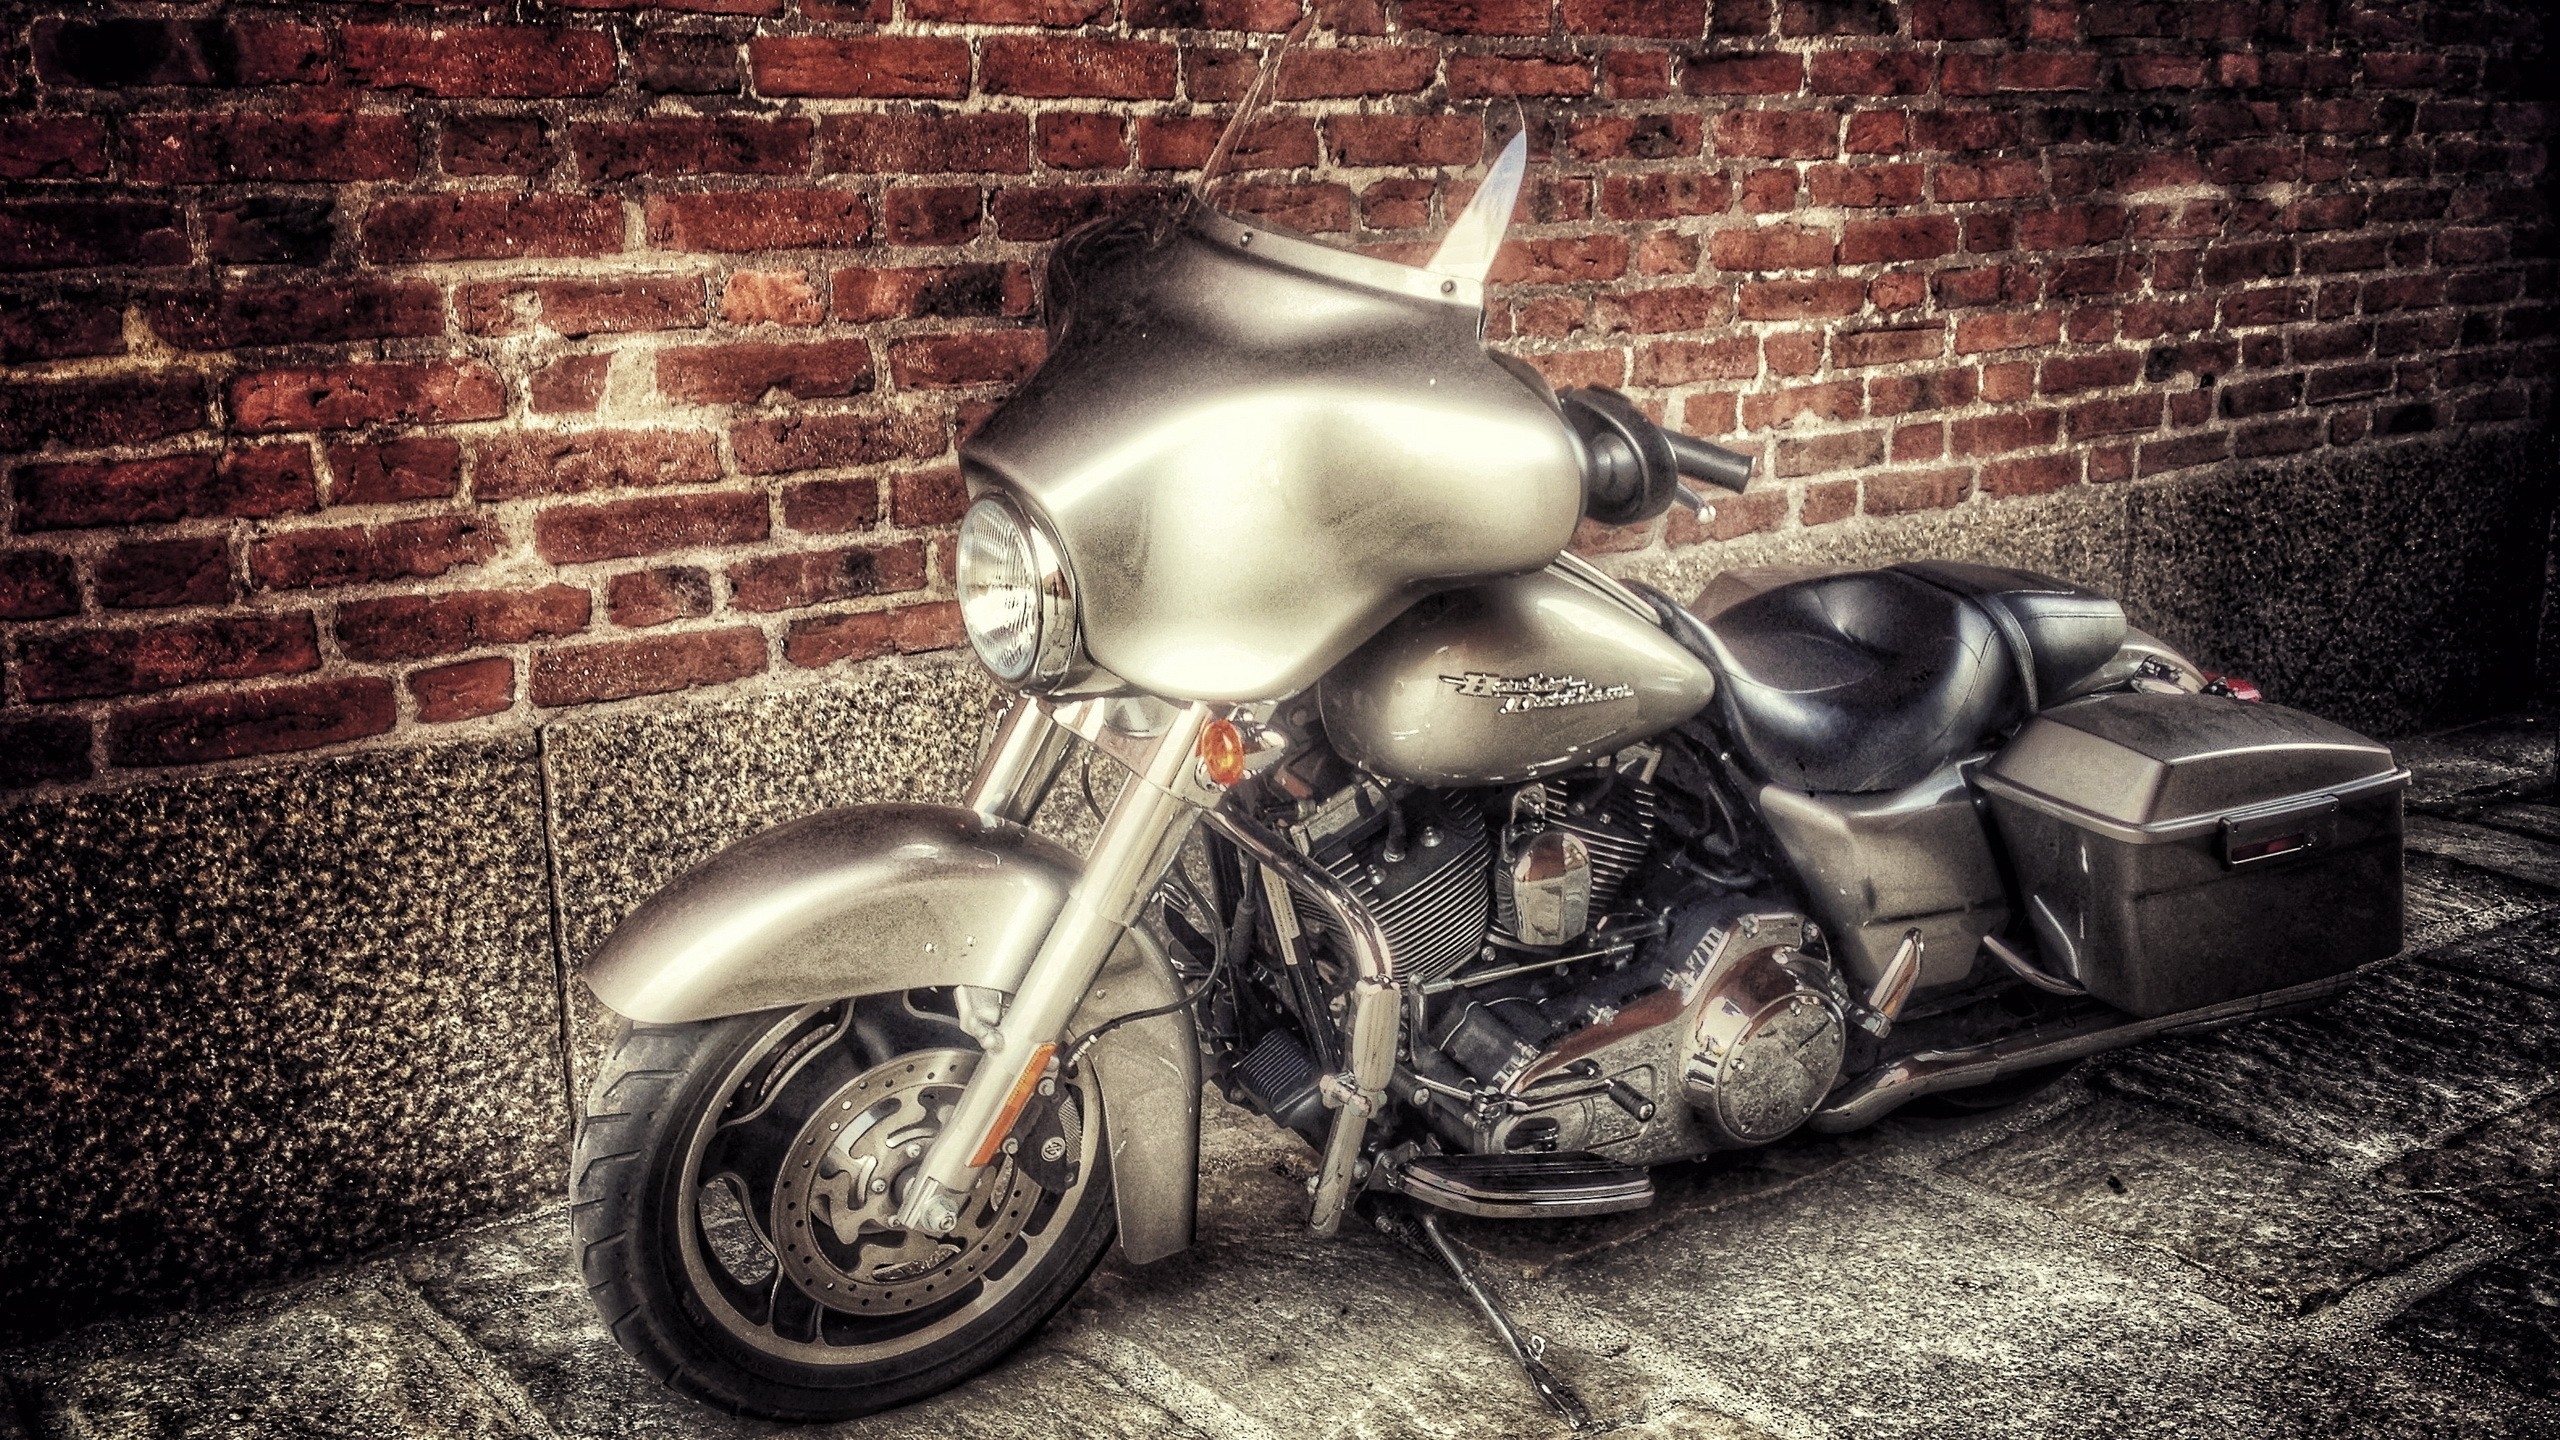 Stunning Old Harley Davidson for 2560x1440 HDTV resolution